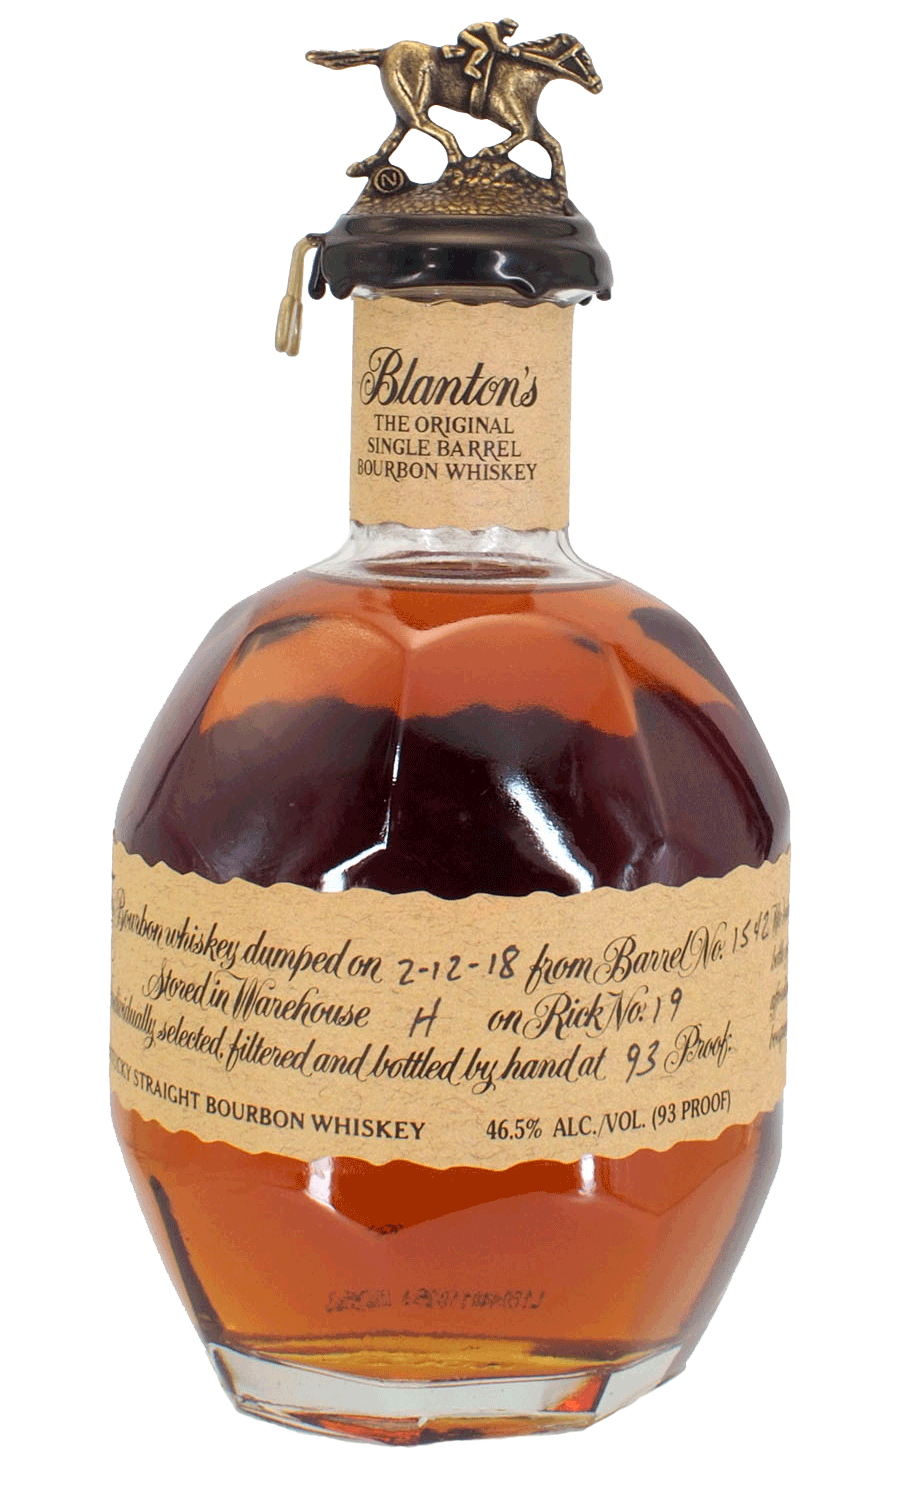 Blanton's Bourbon Whiskey The Original Single Barrel